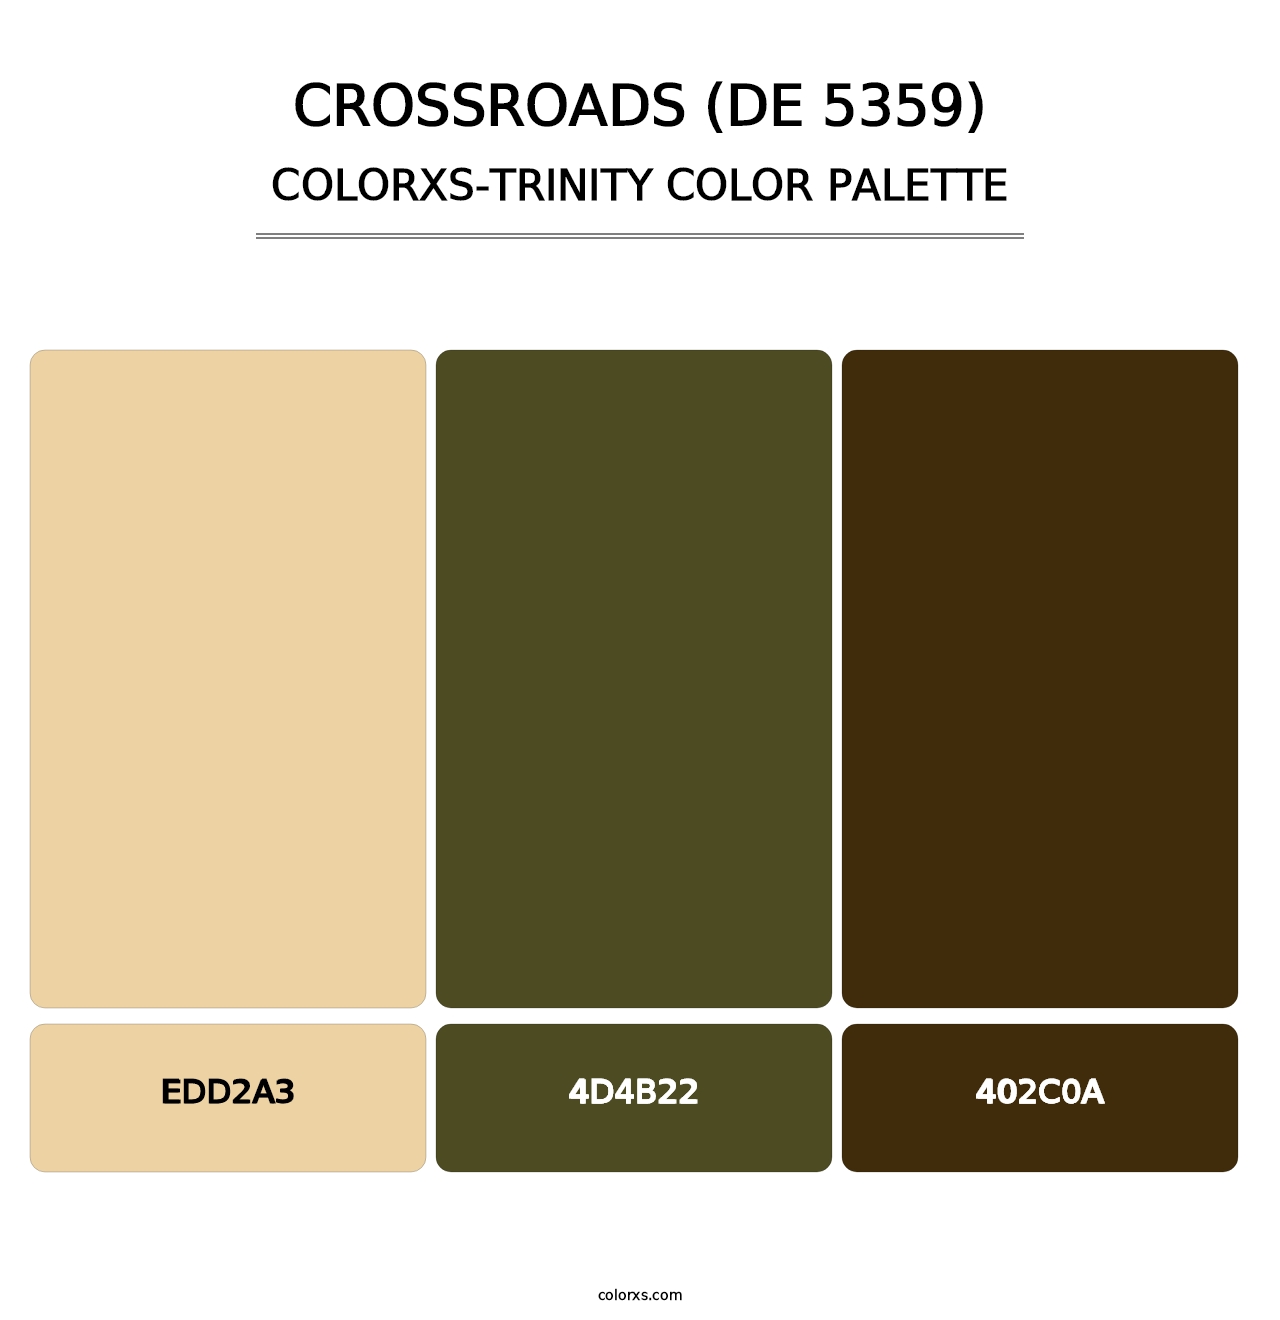 Crossroads (DE 5359) - Colorxs Trinity Palette